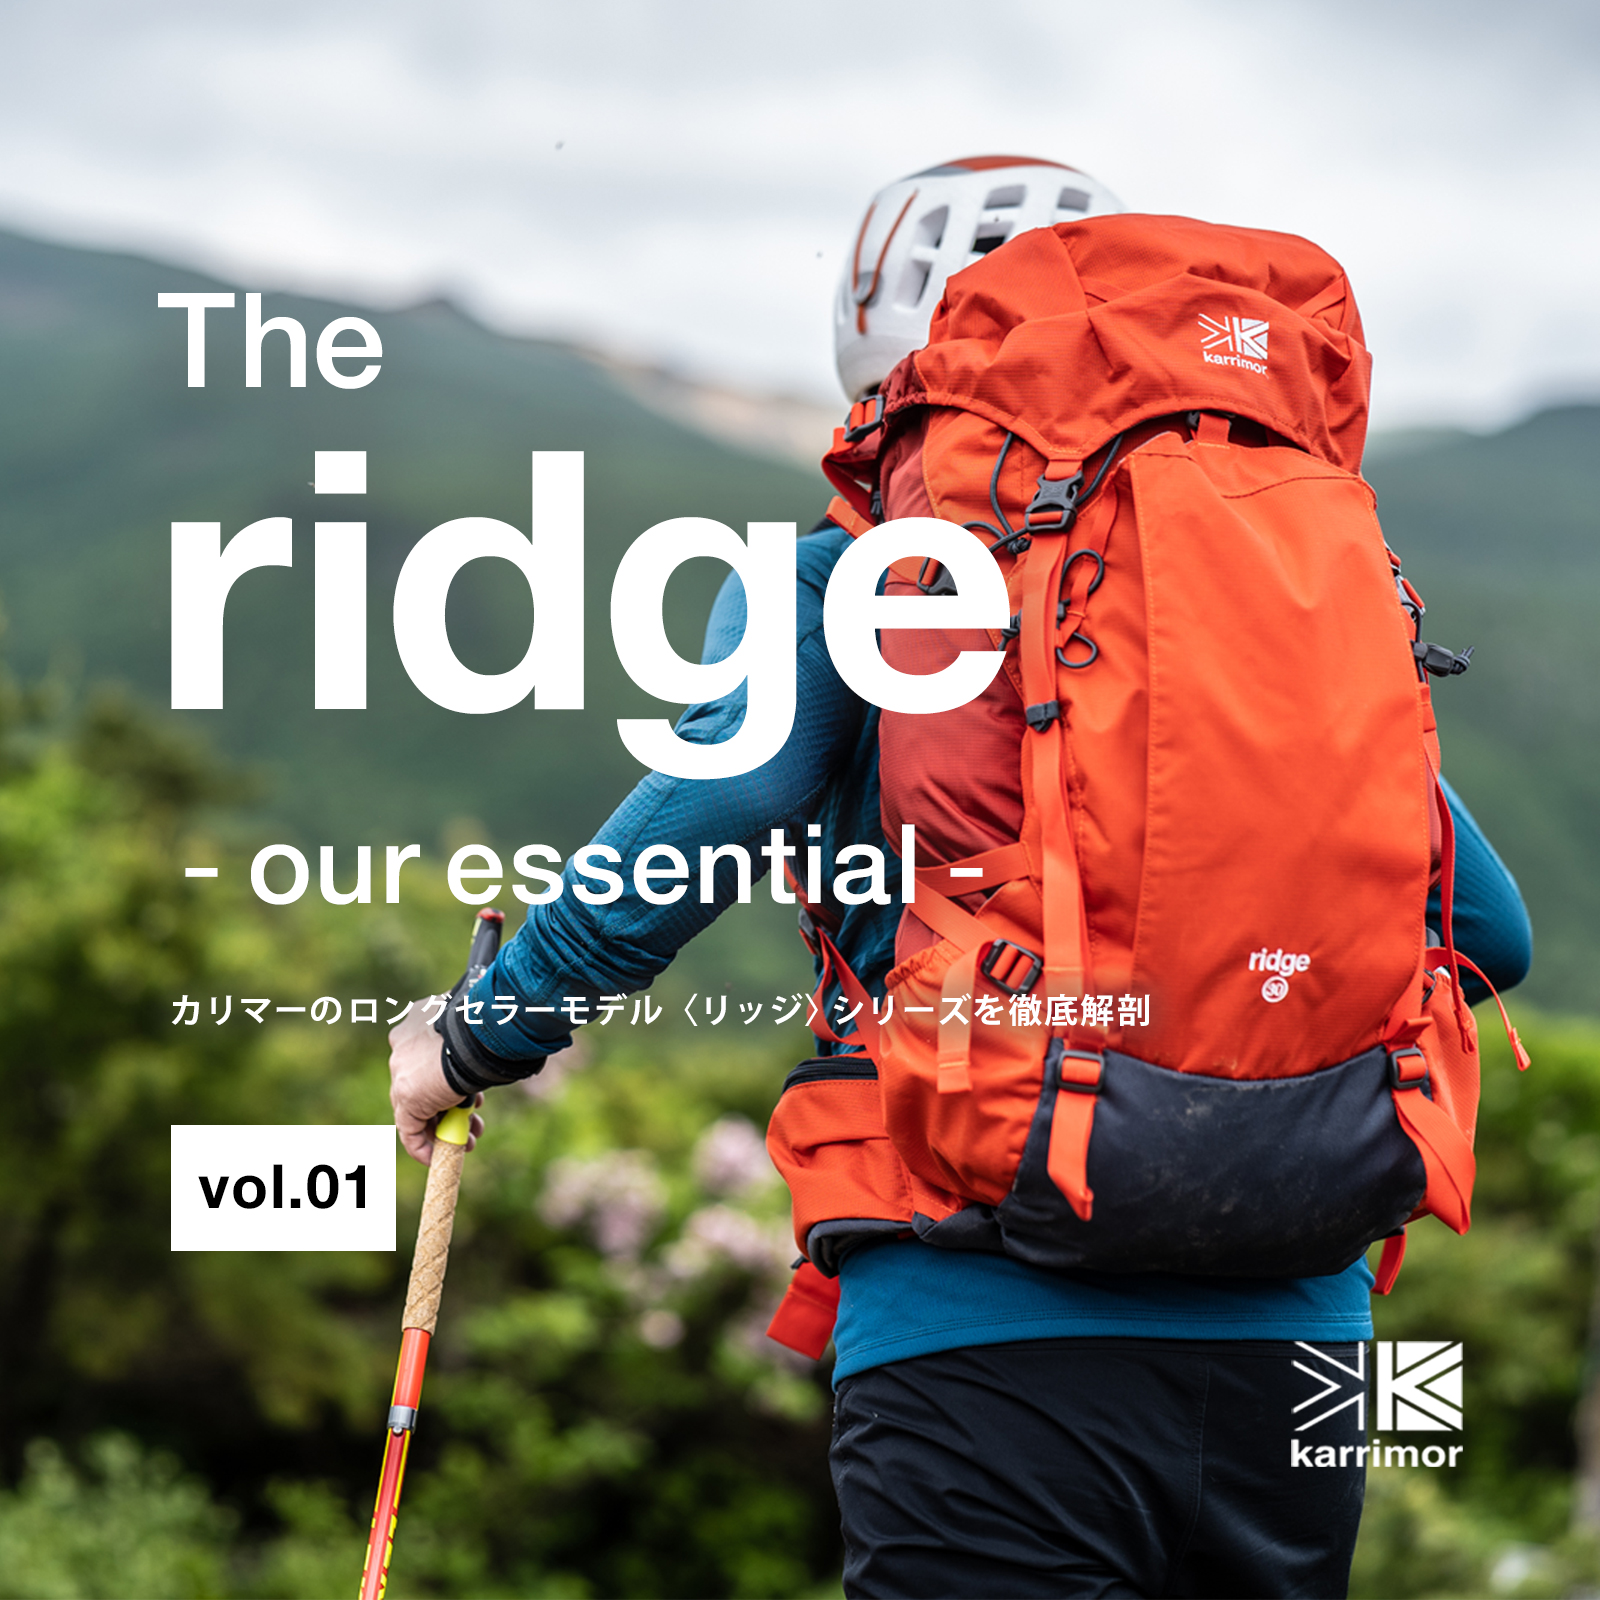 The ridge - our essential -